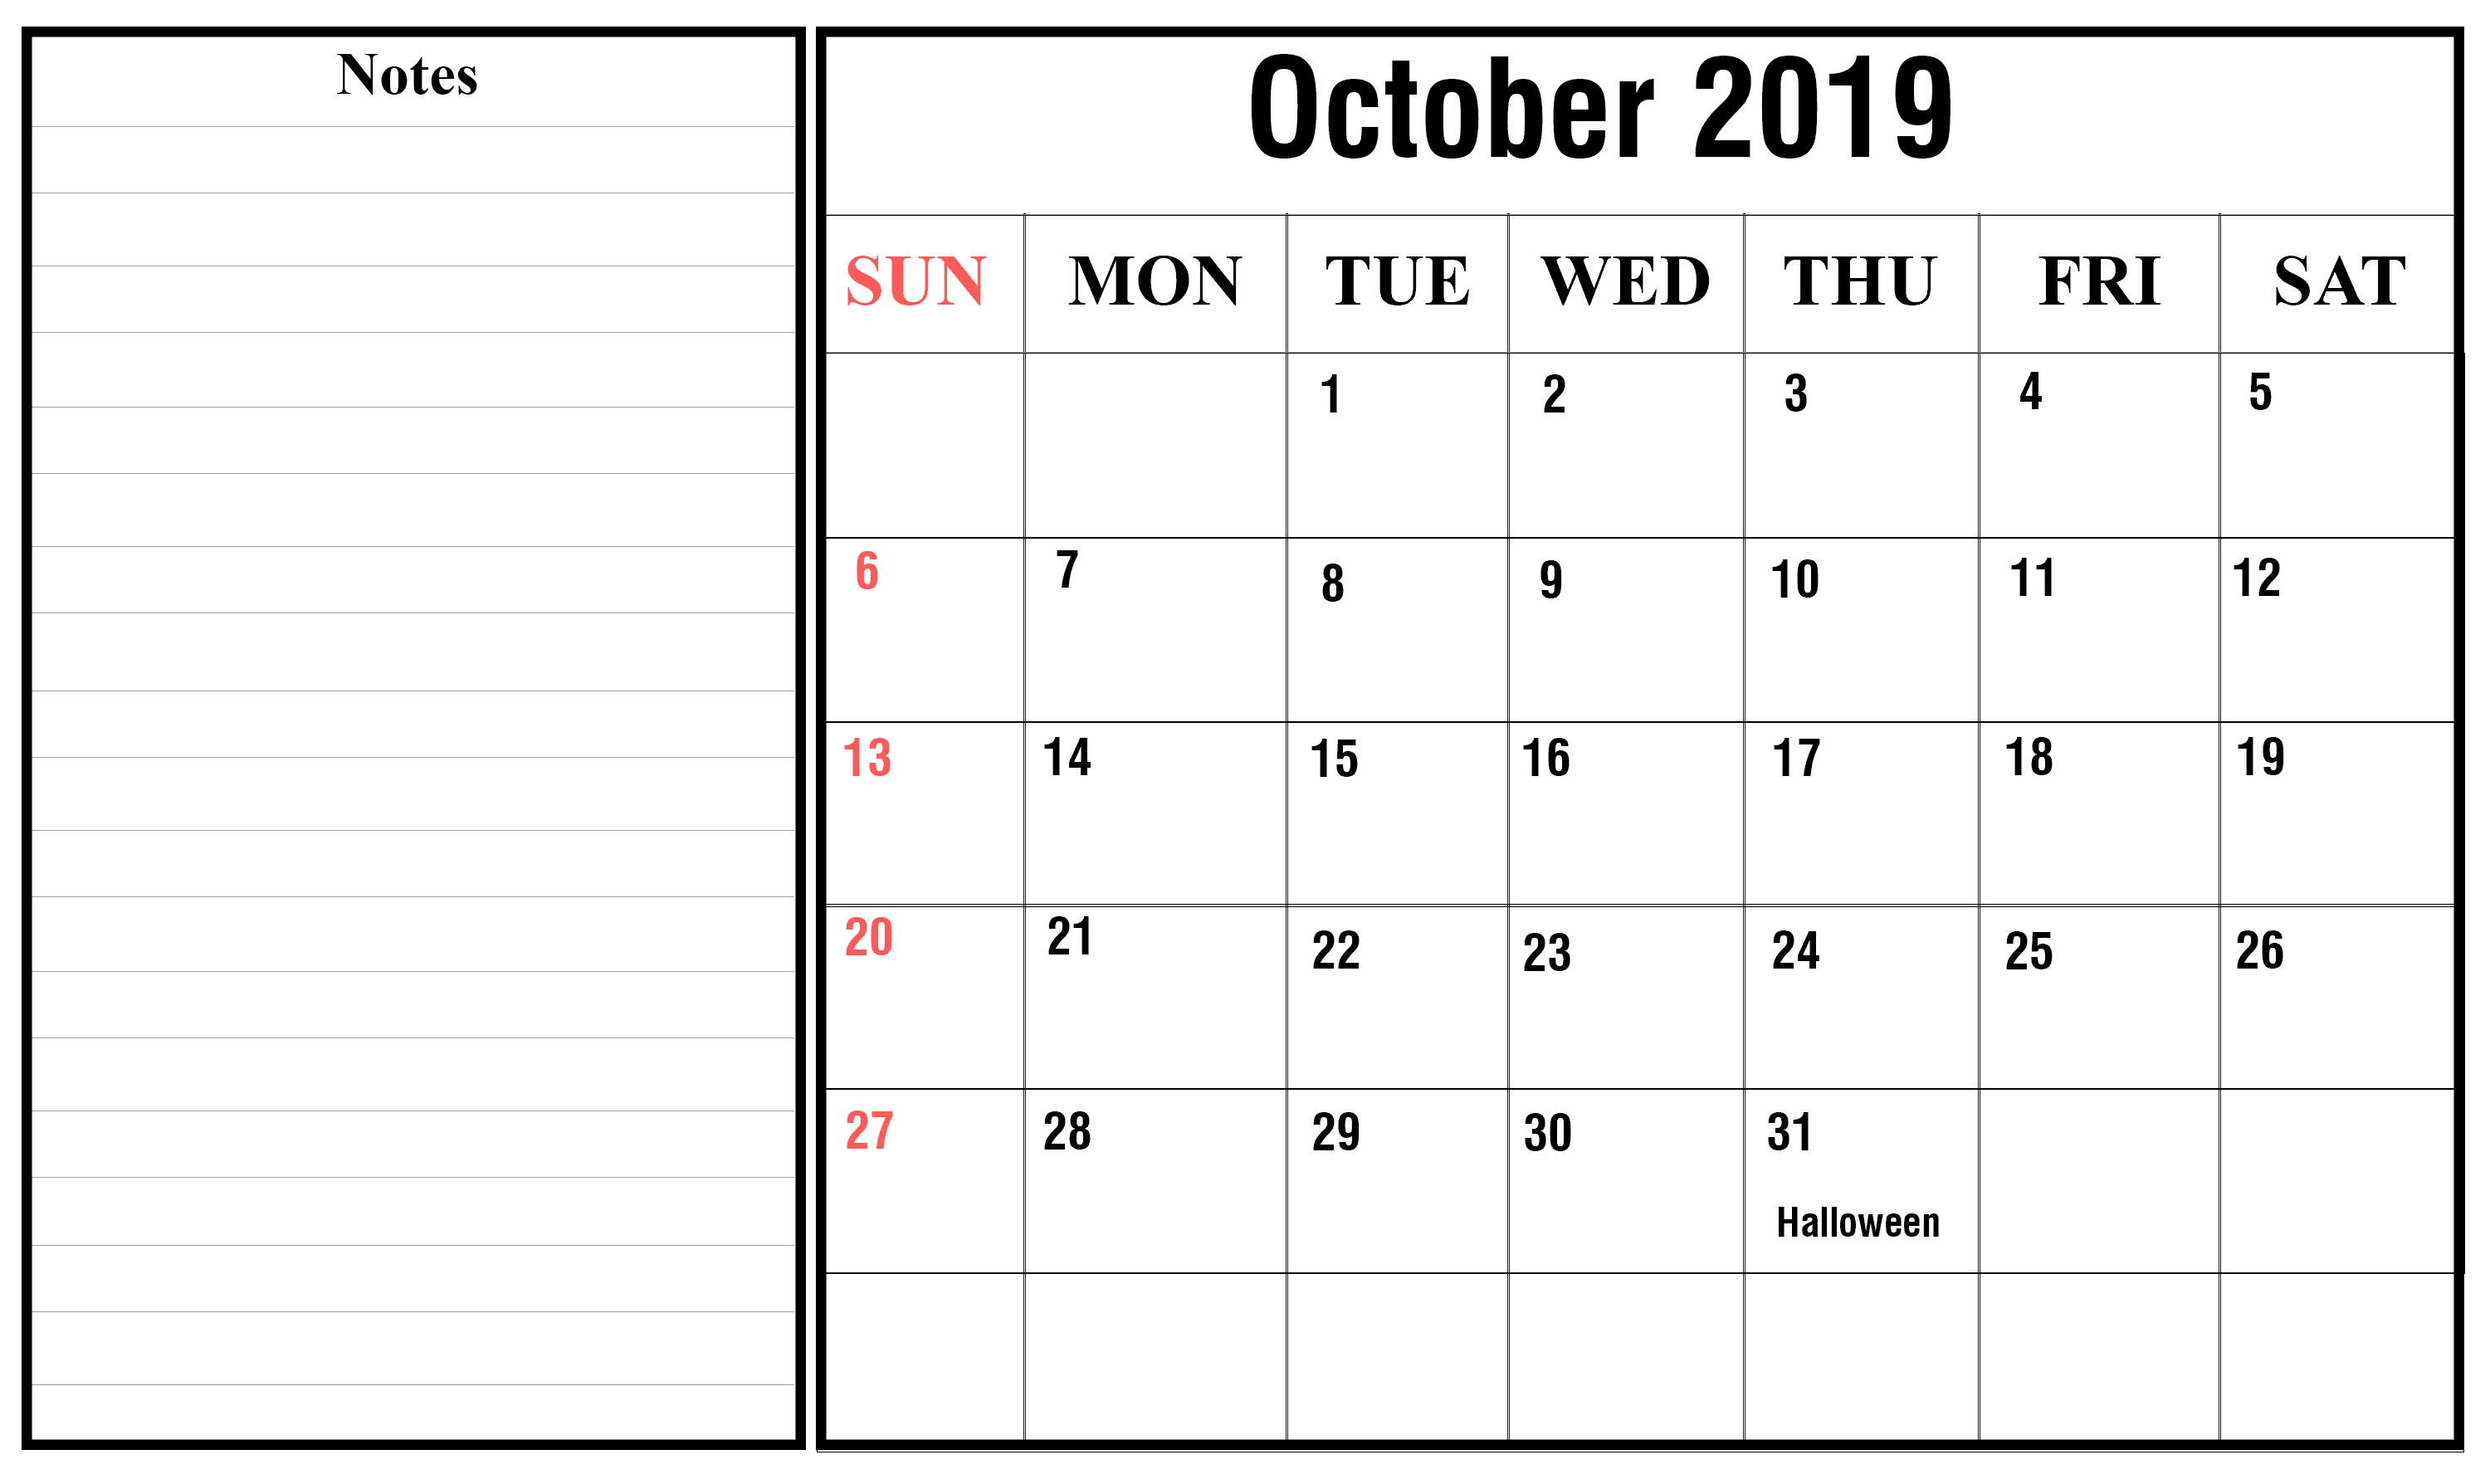 October Calendar 2019 with Holidays